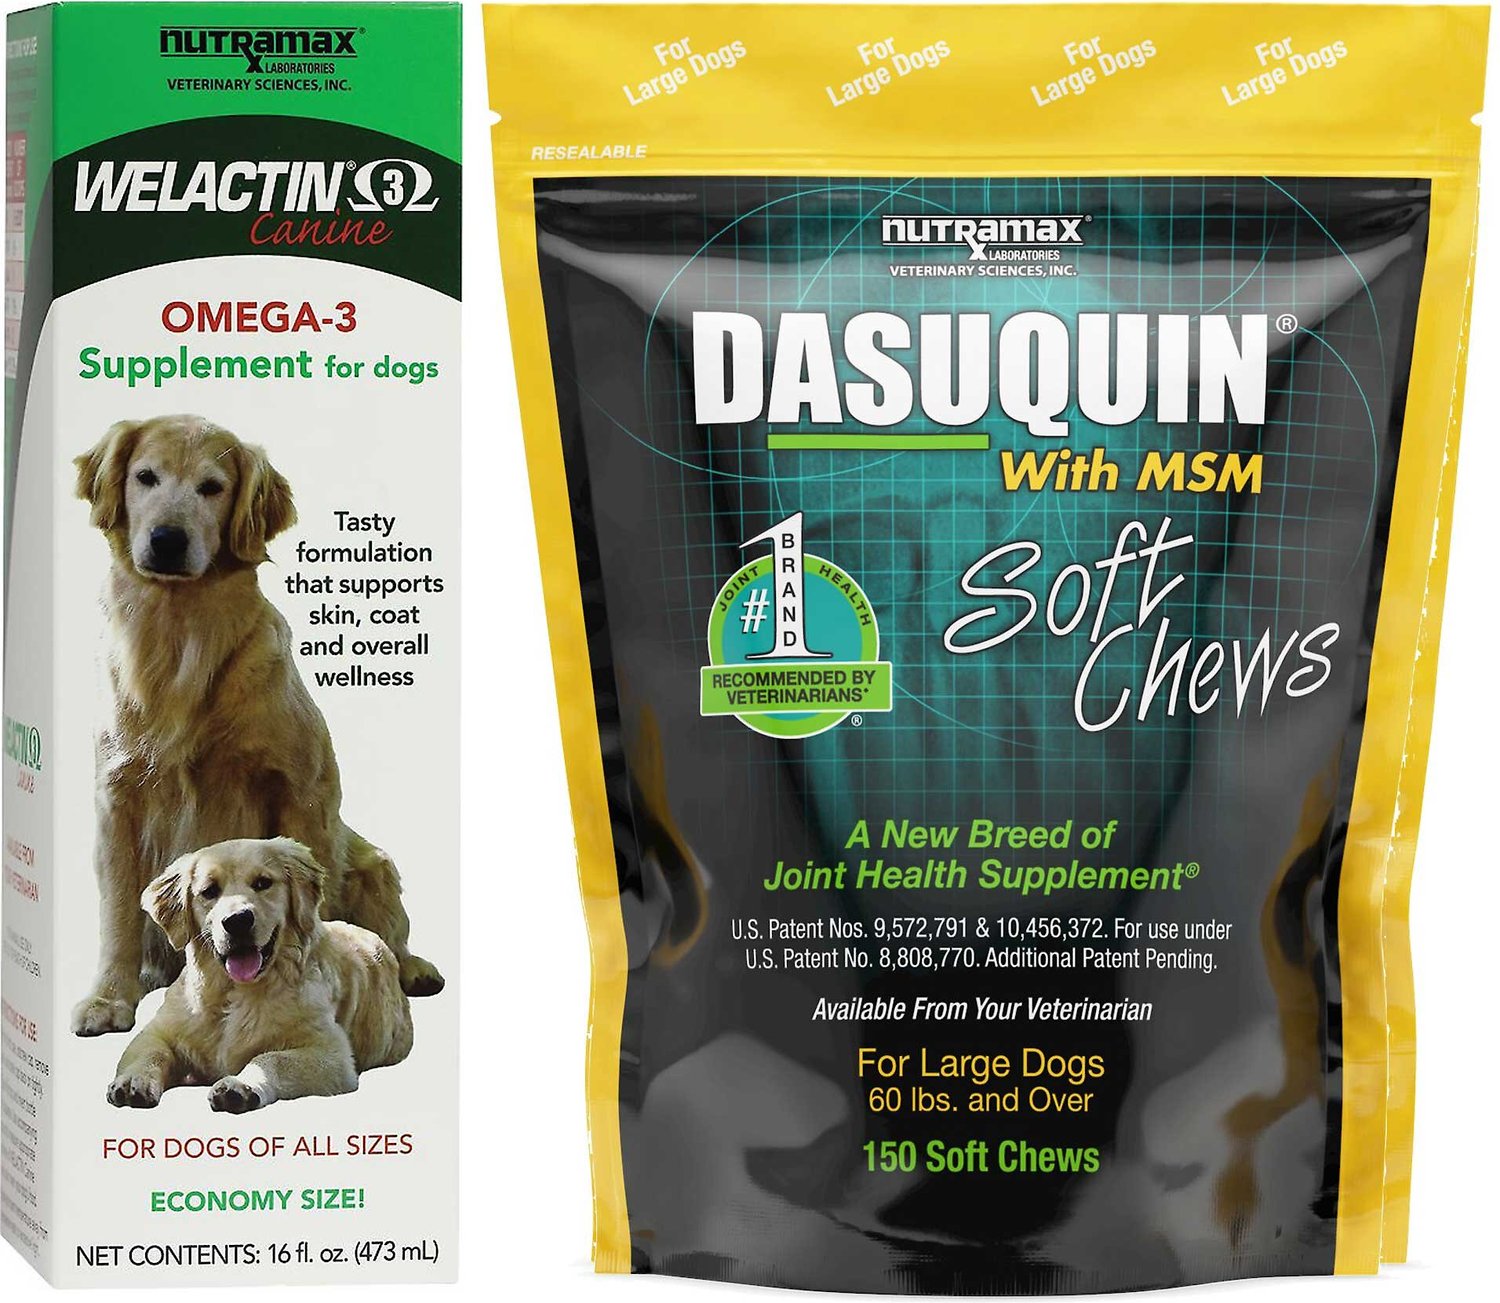 NUTRAMAX Welactin Canine Omega3 Liquid + Dasuquin with MSM Soft Chews